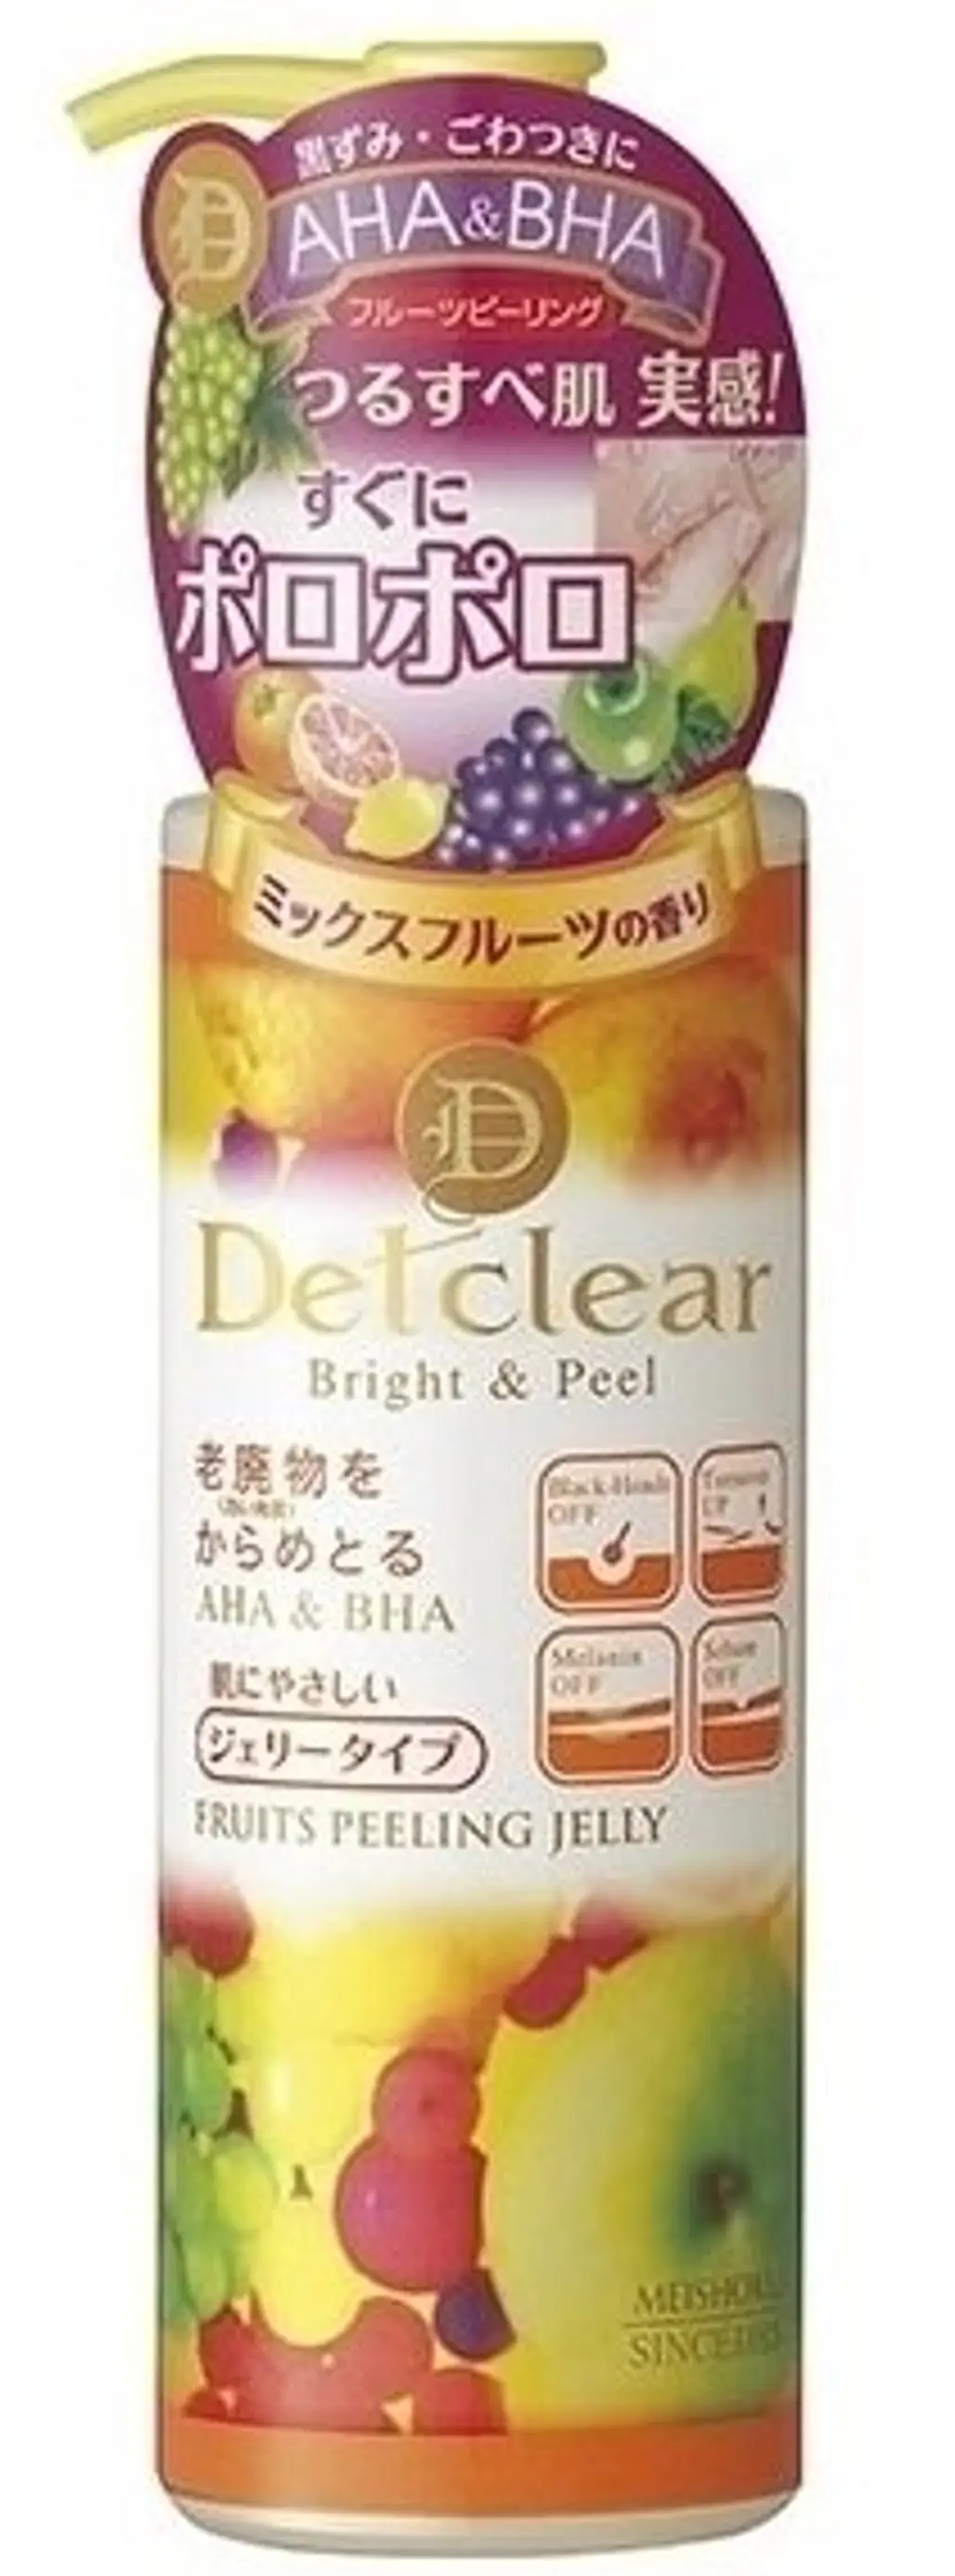 Meishoku DET Clear Bright & Peel Peeling Jelly